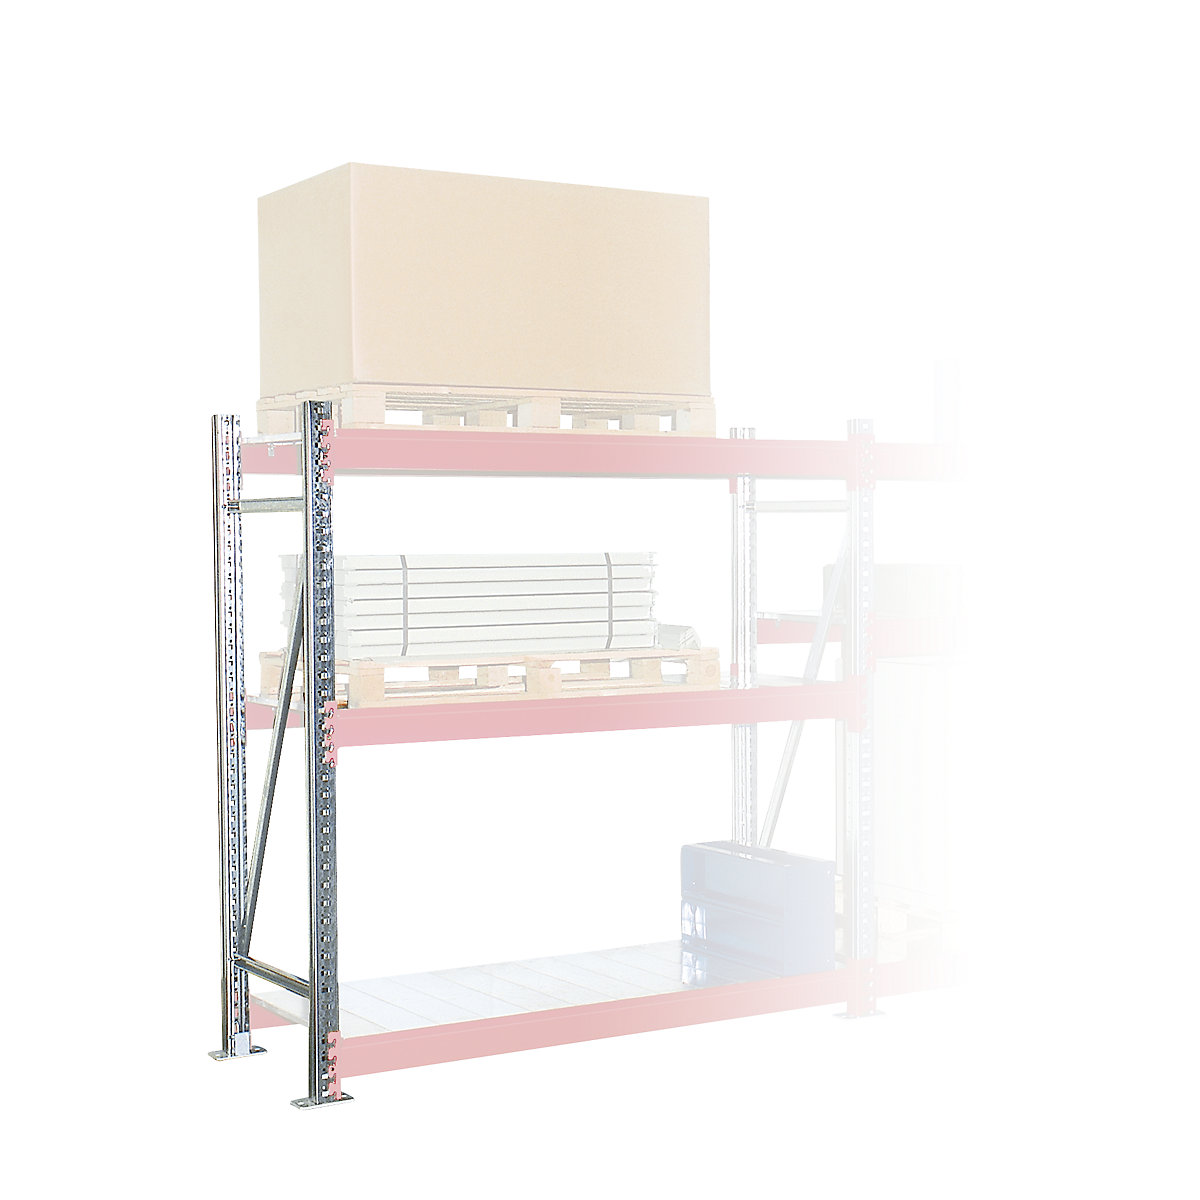 Heavy-load shelving support frames – eurokraft pro